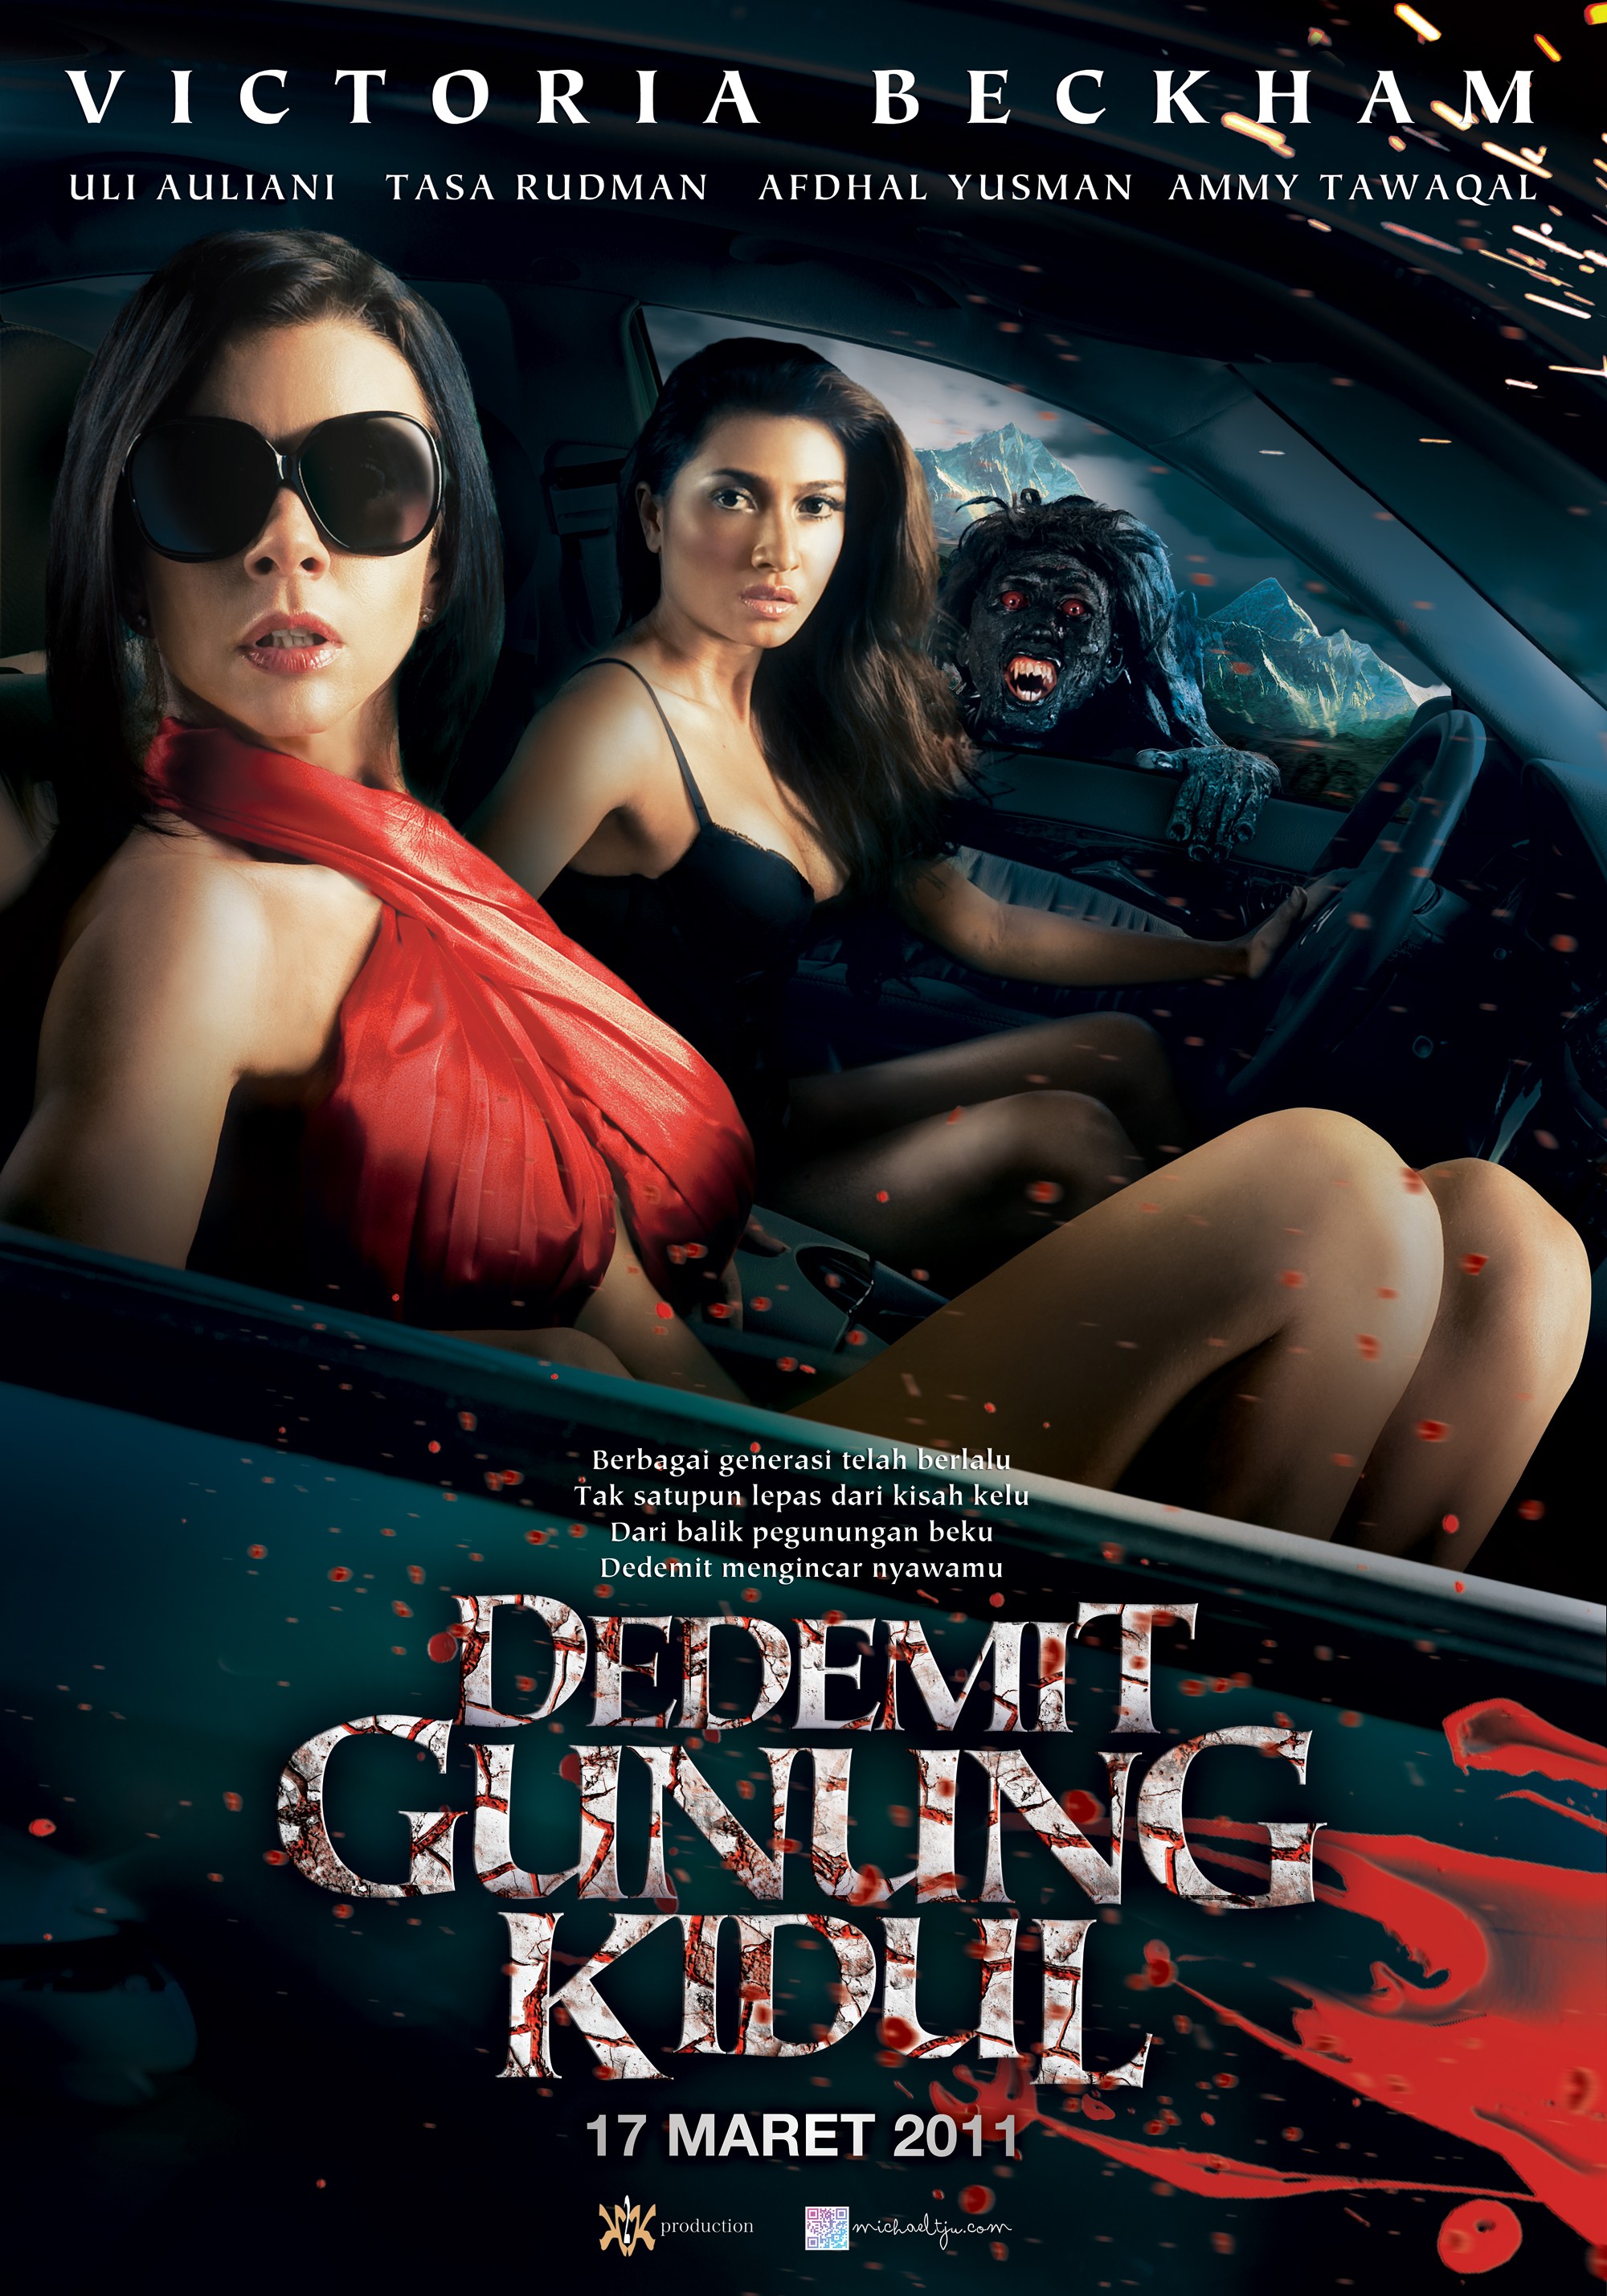 Mega Sized Movie Poster Image for Dedemit gunung kidul 